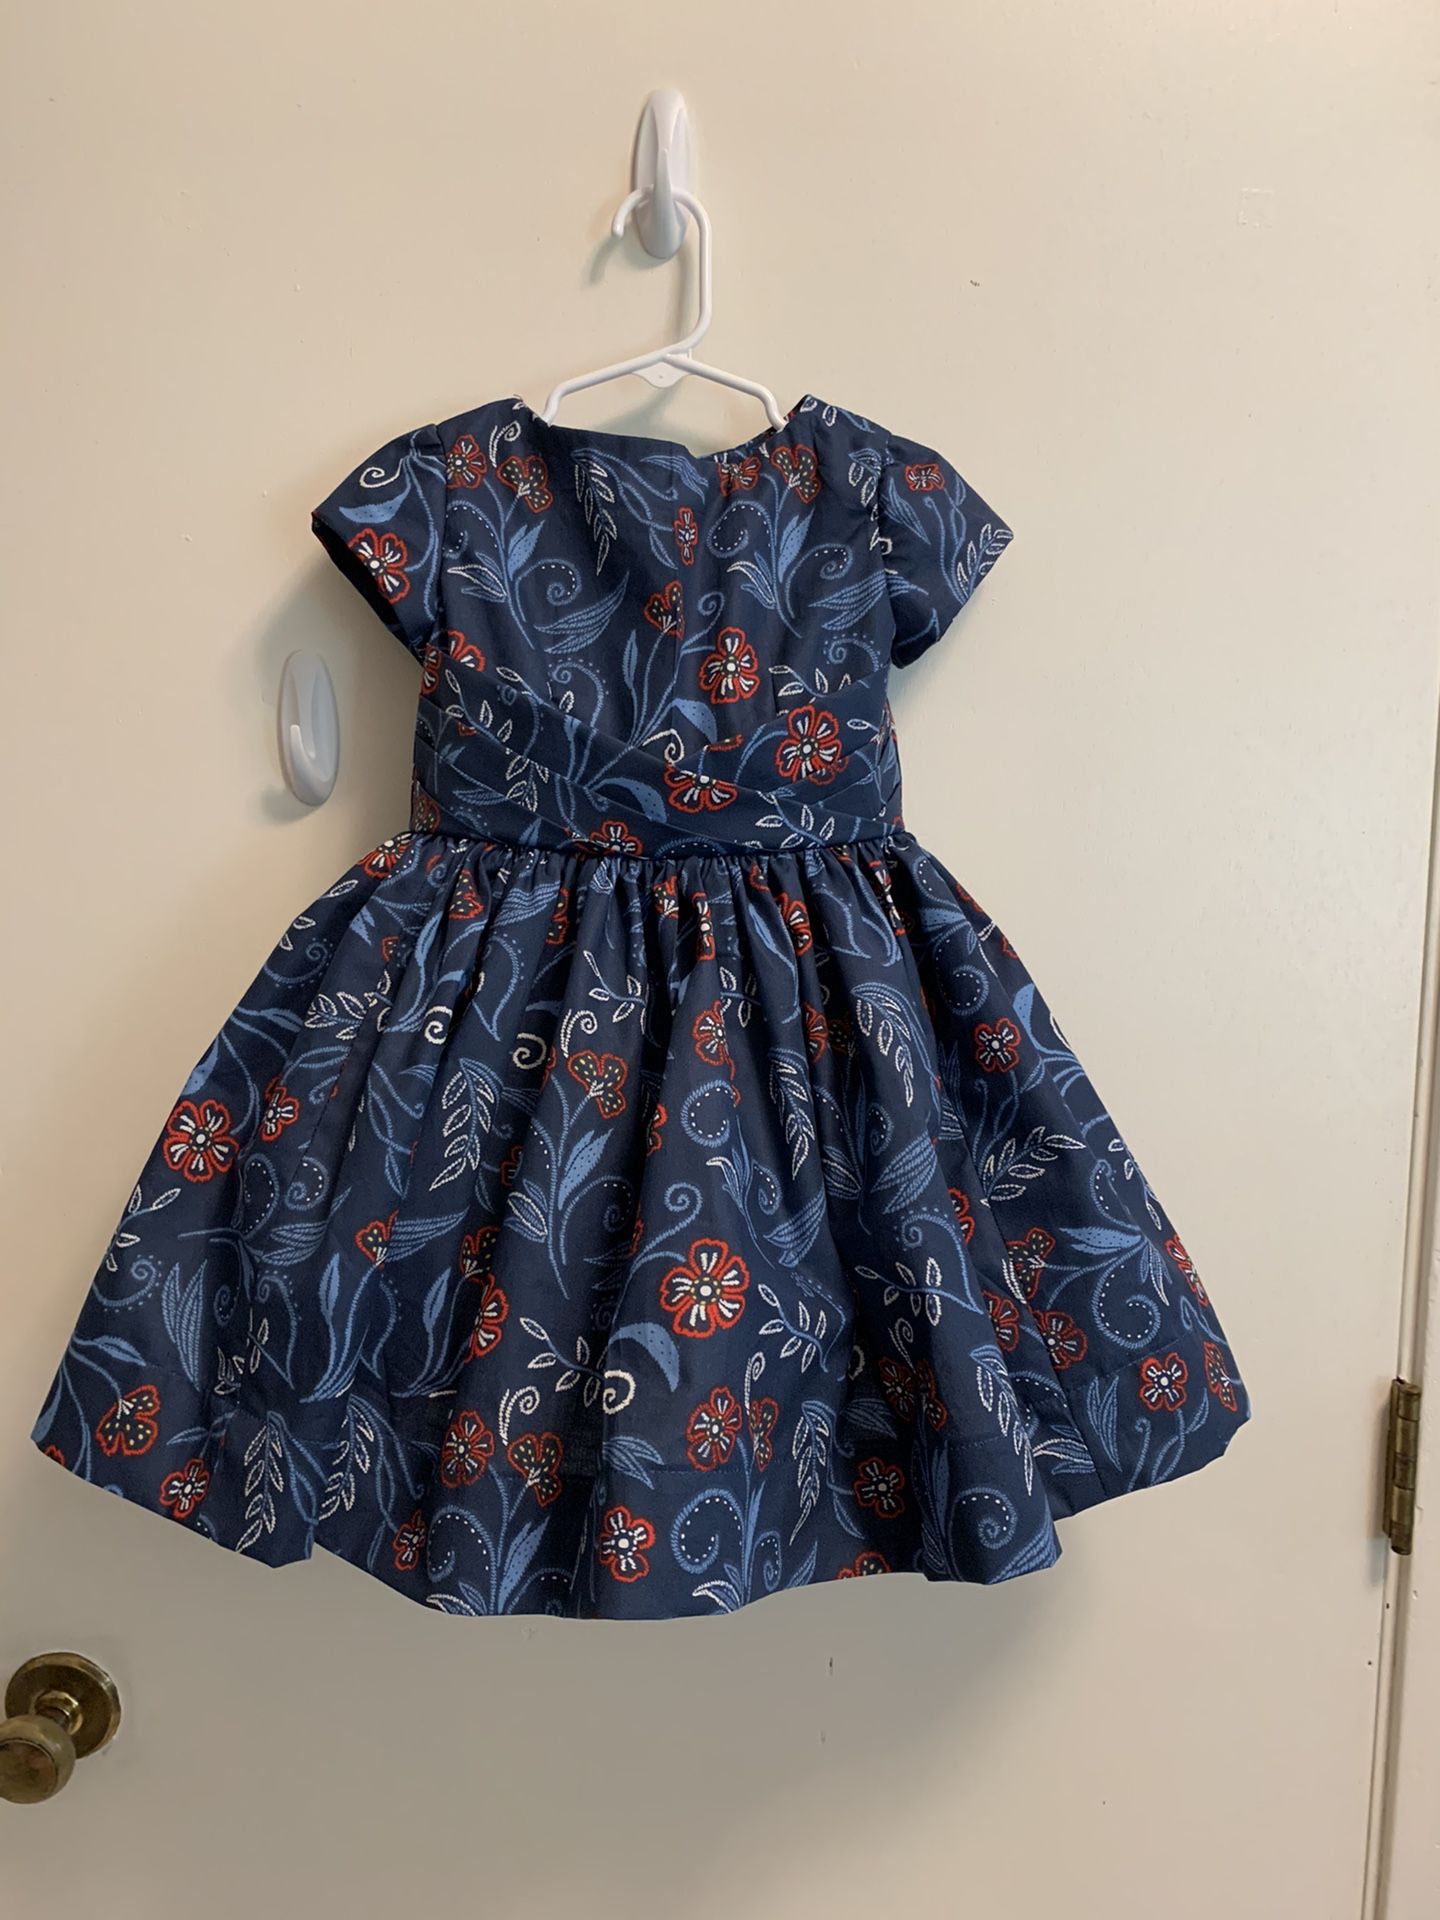 New Toddler Dress 3T